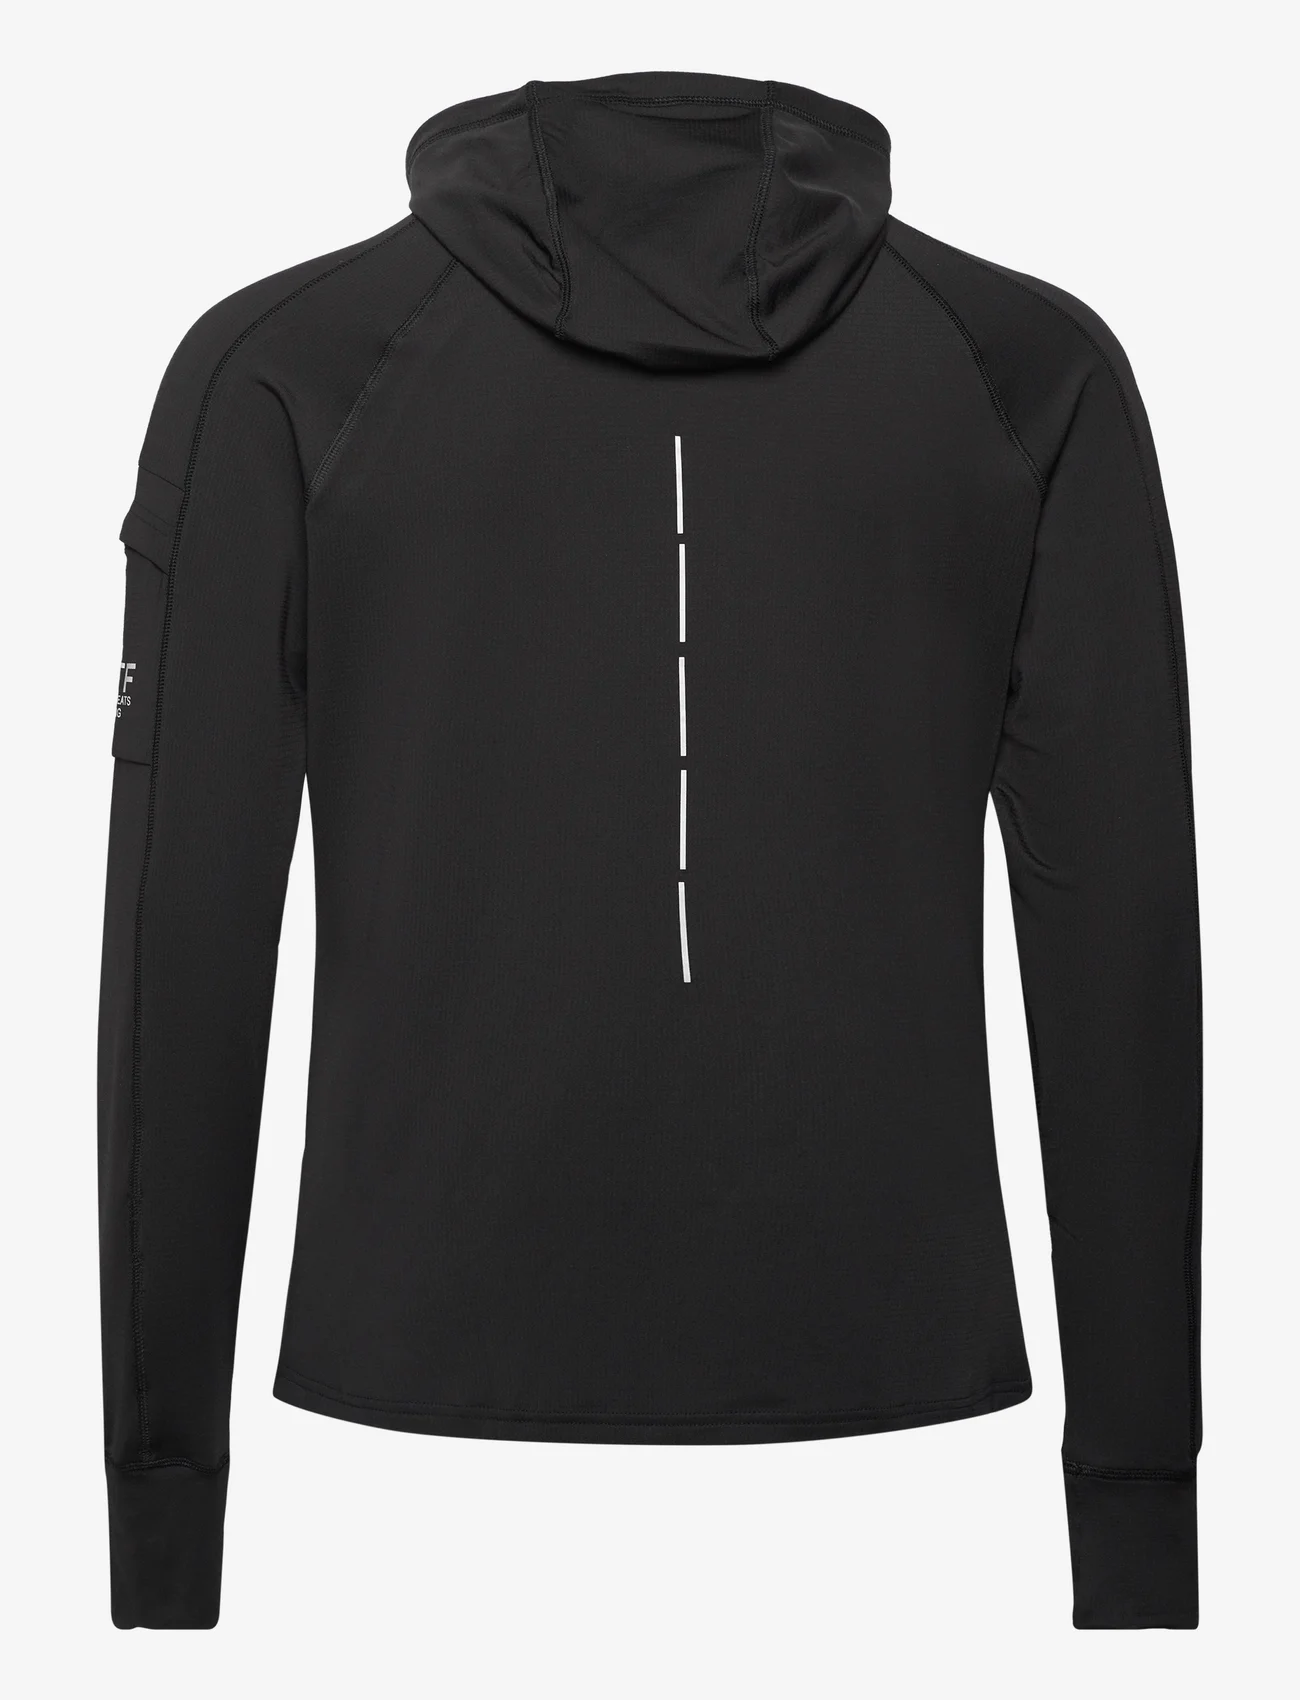 Newline - nwlRAPID HOOD MIDLAYER - mid layer jackets - black - 1